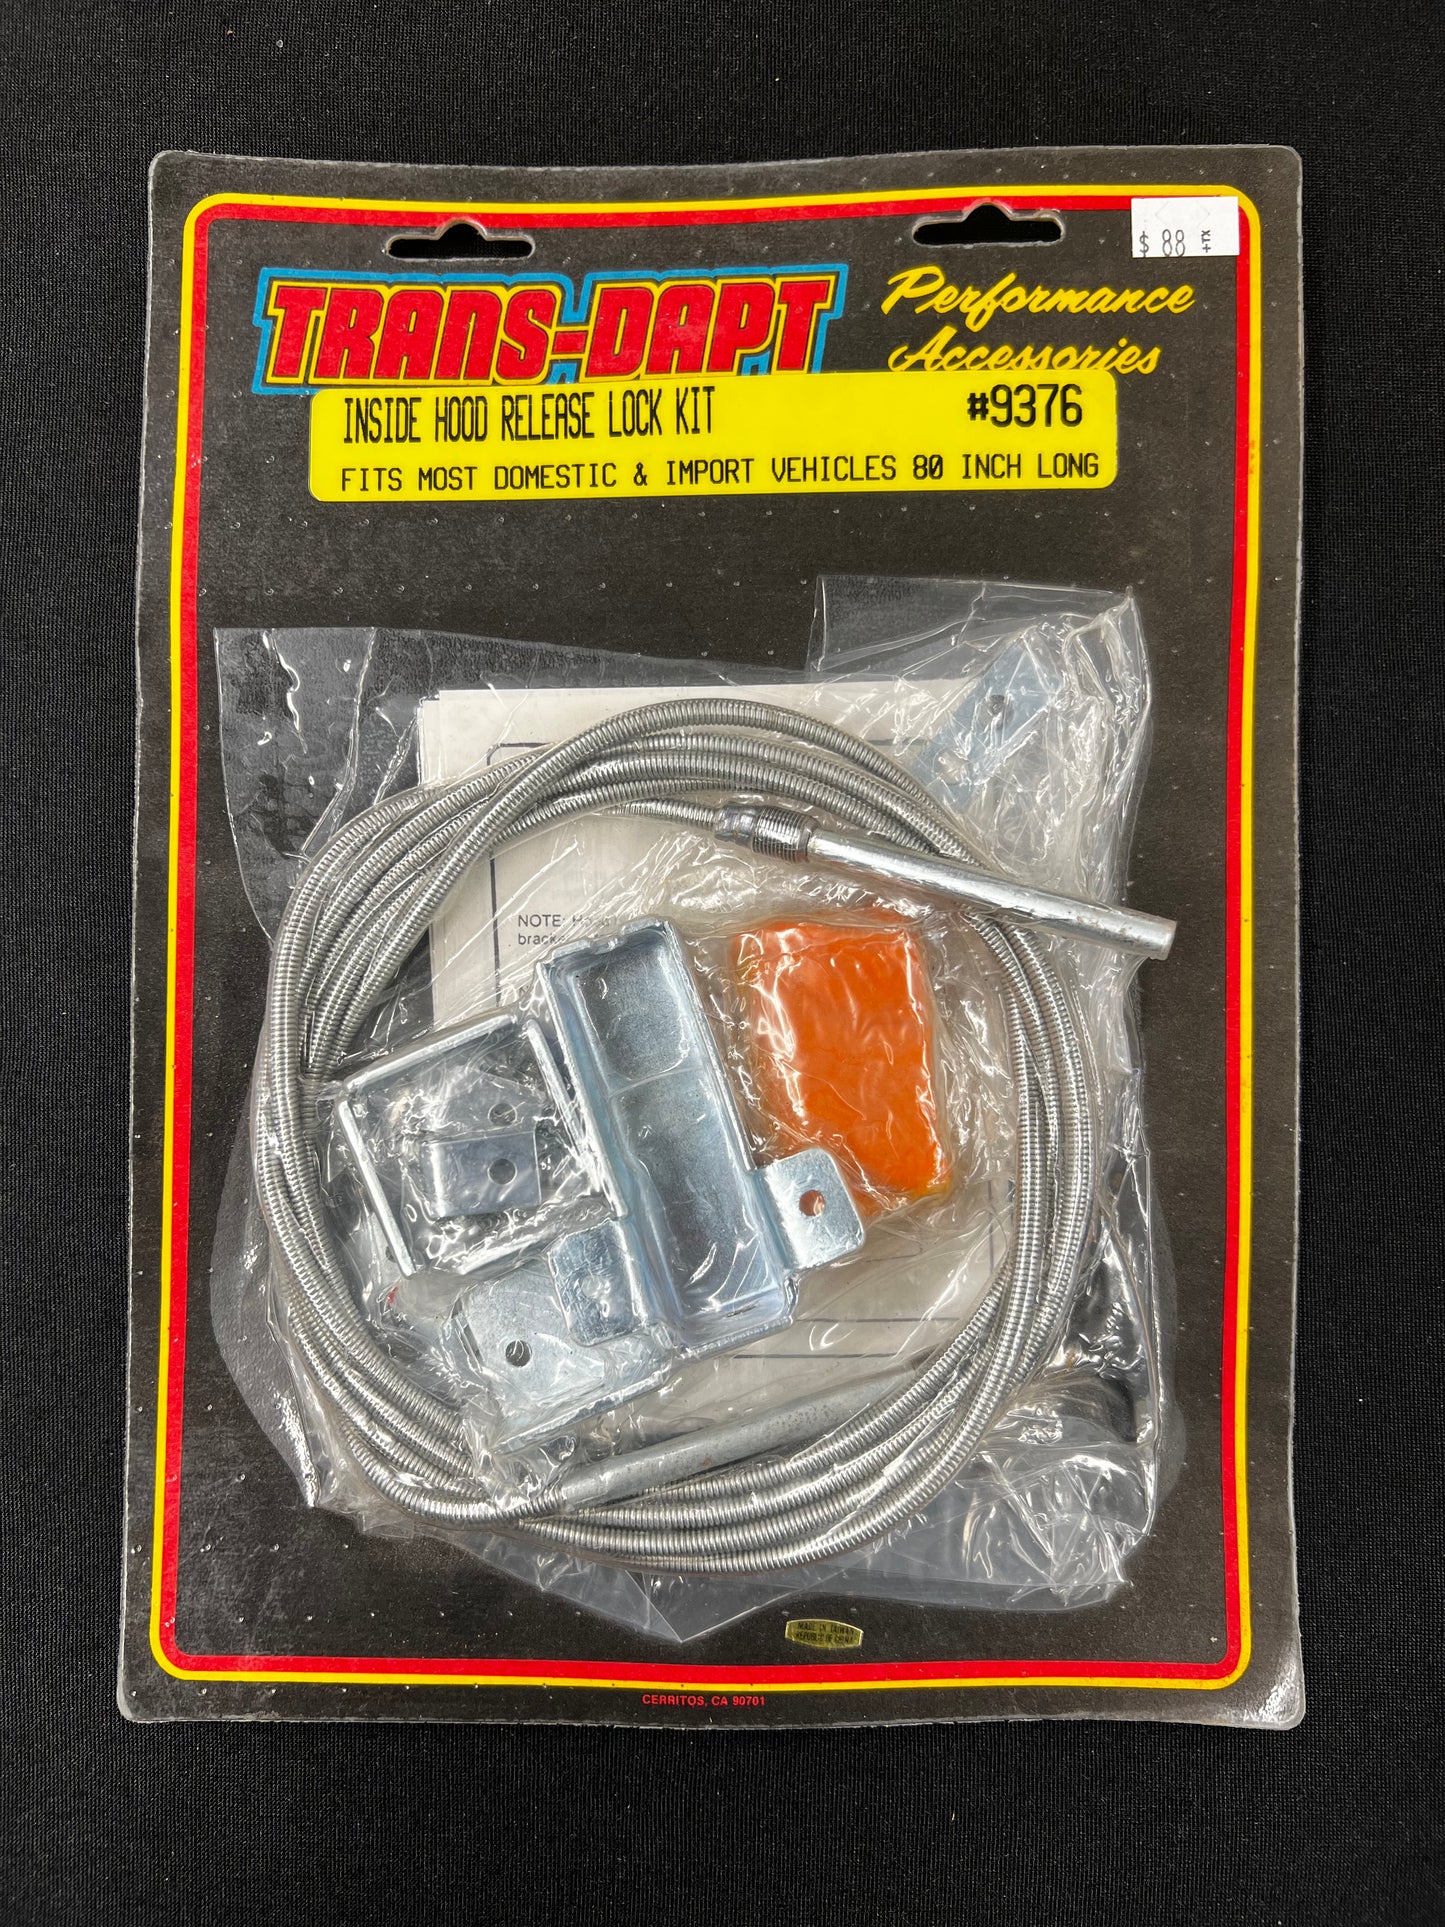 Trans-dapt Inside Hood Release Lock Kit